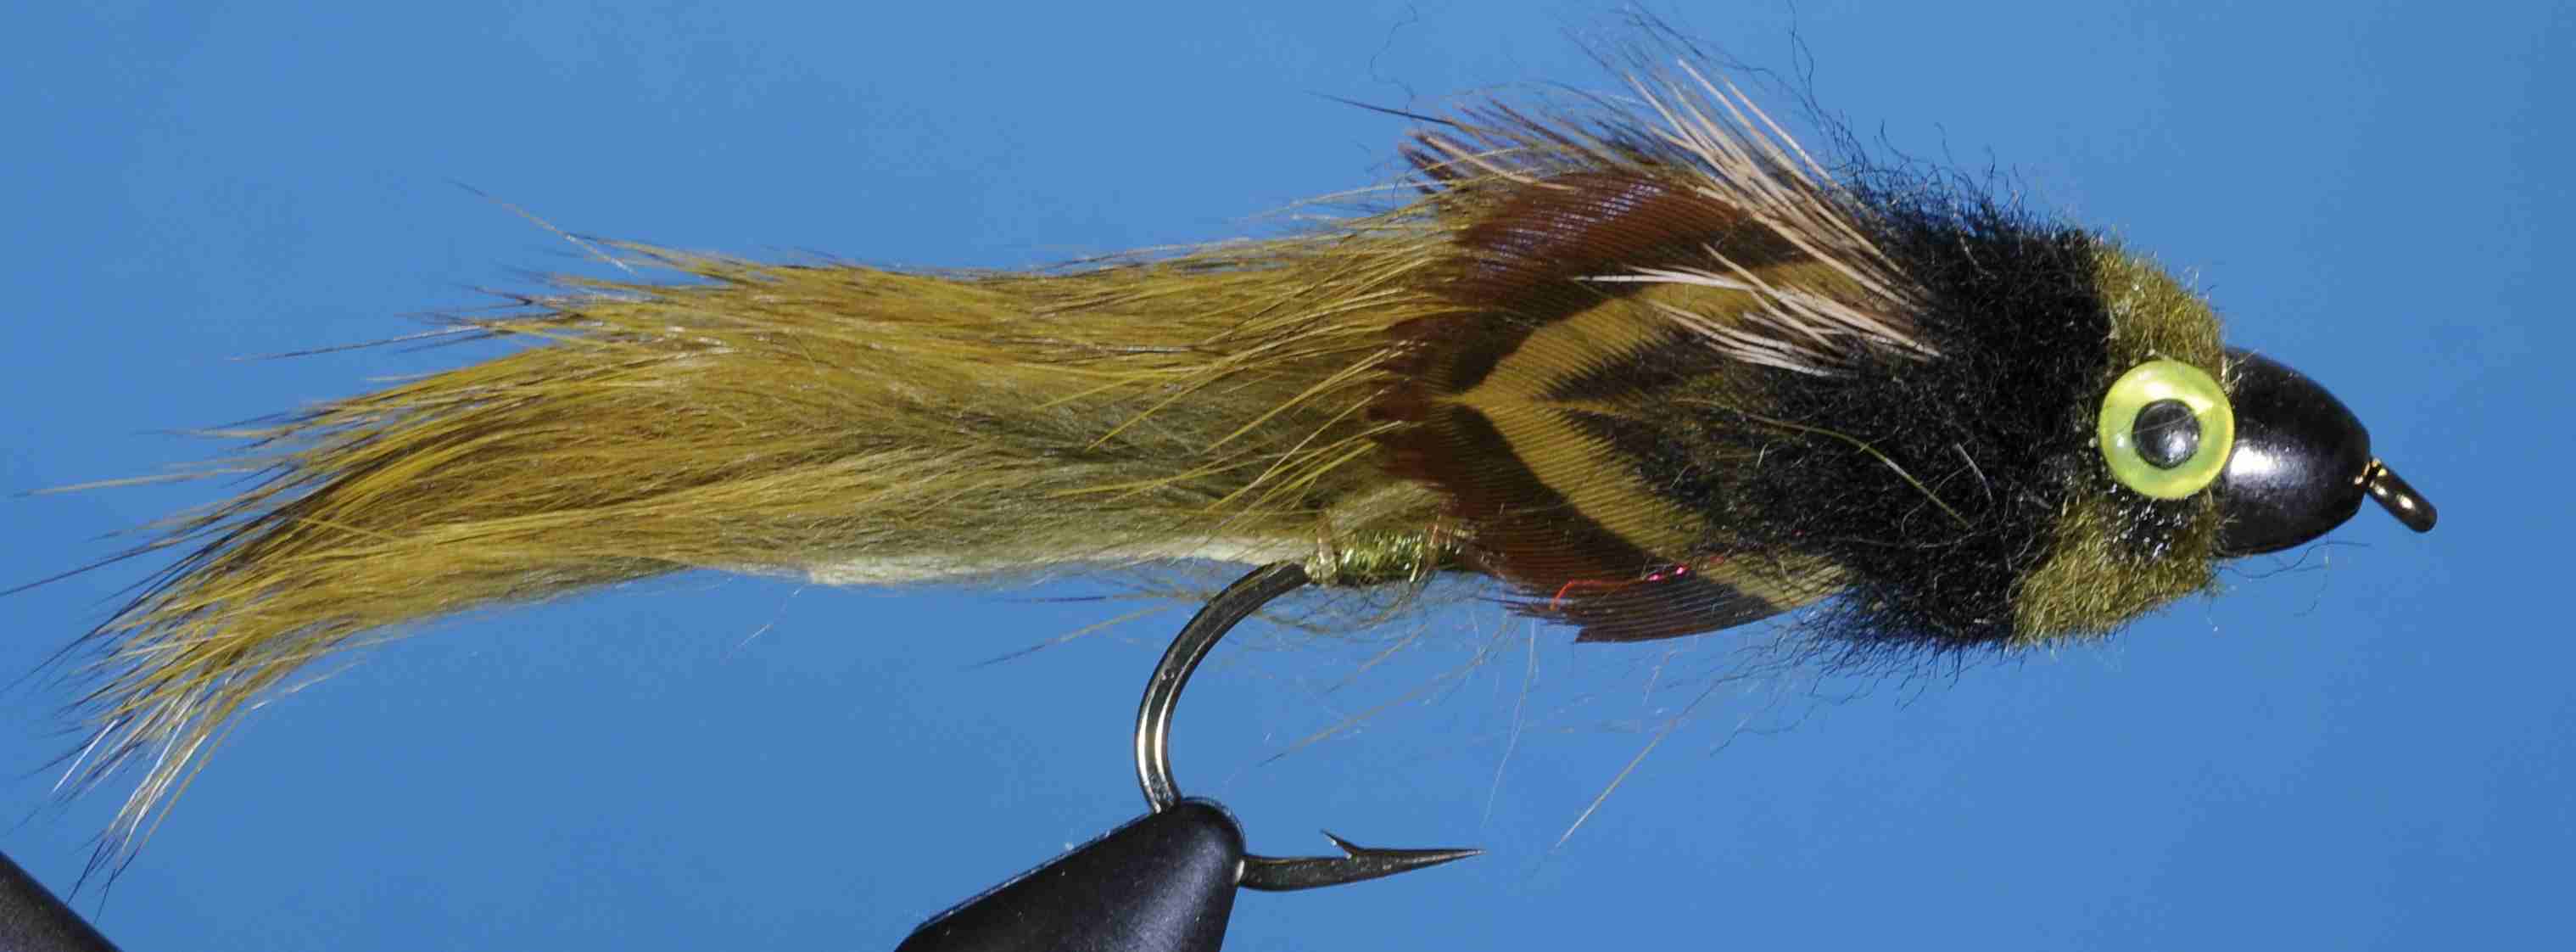 Conehead JR's Streamer Silver Minnow - Fly Fishing Flies